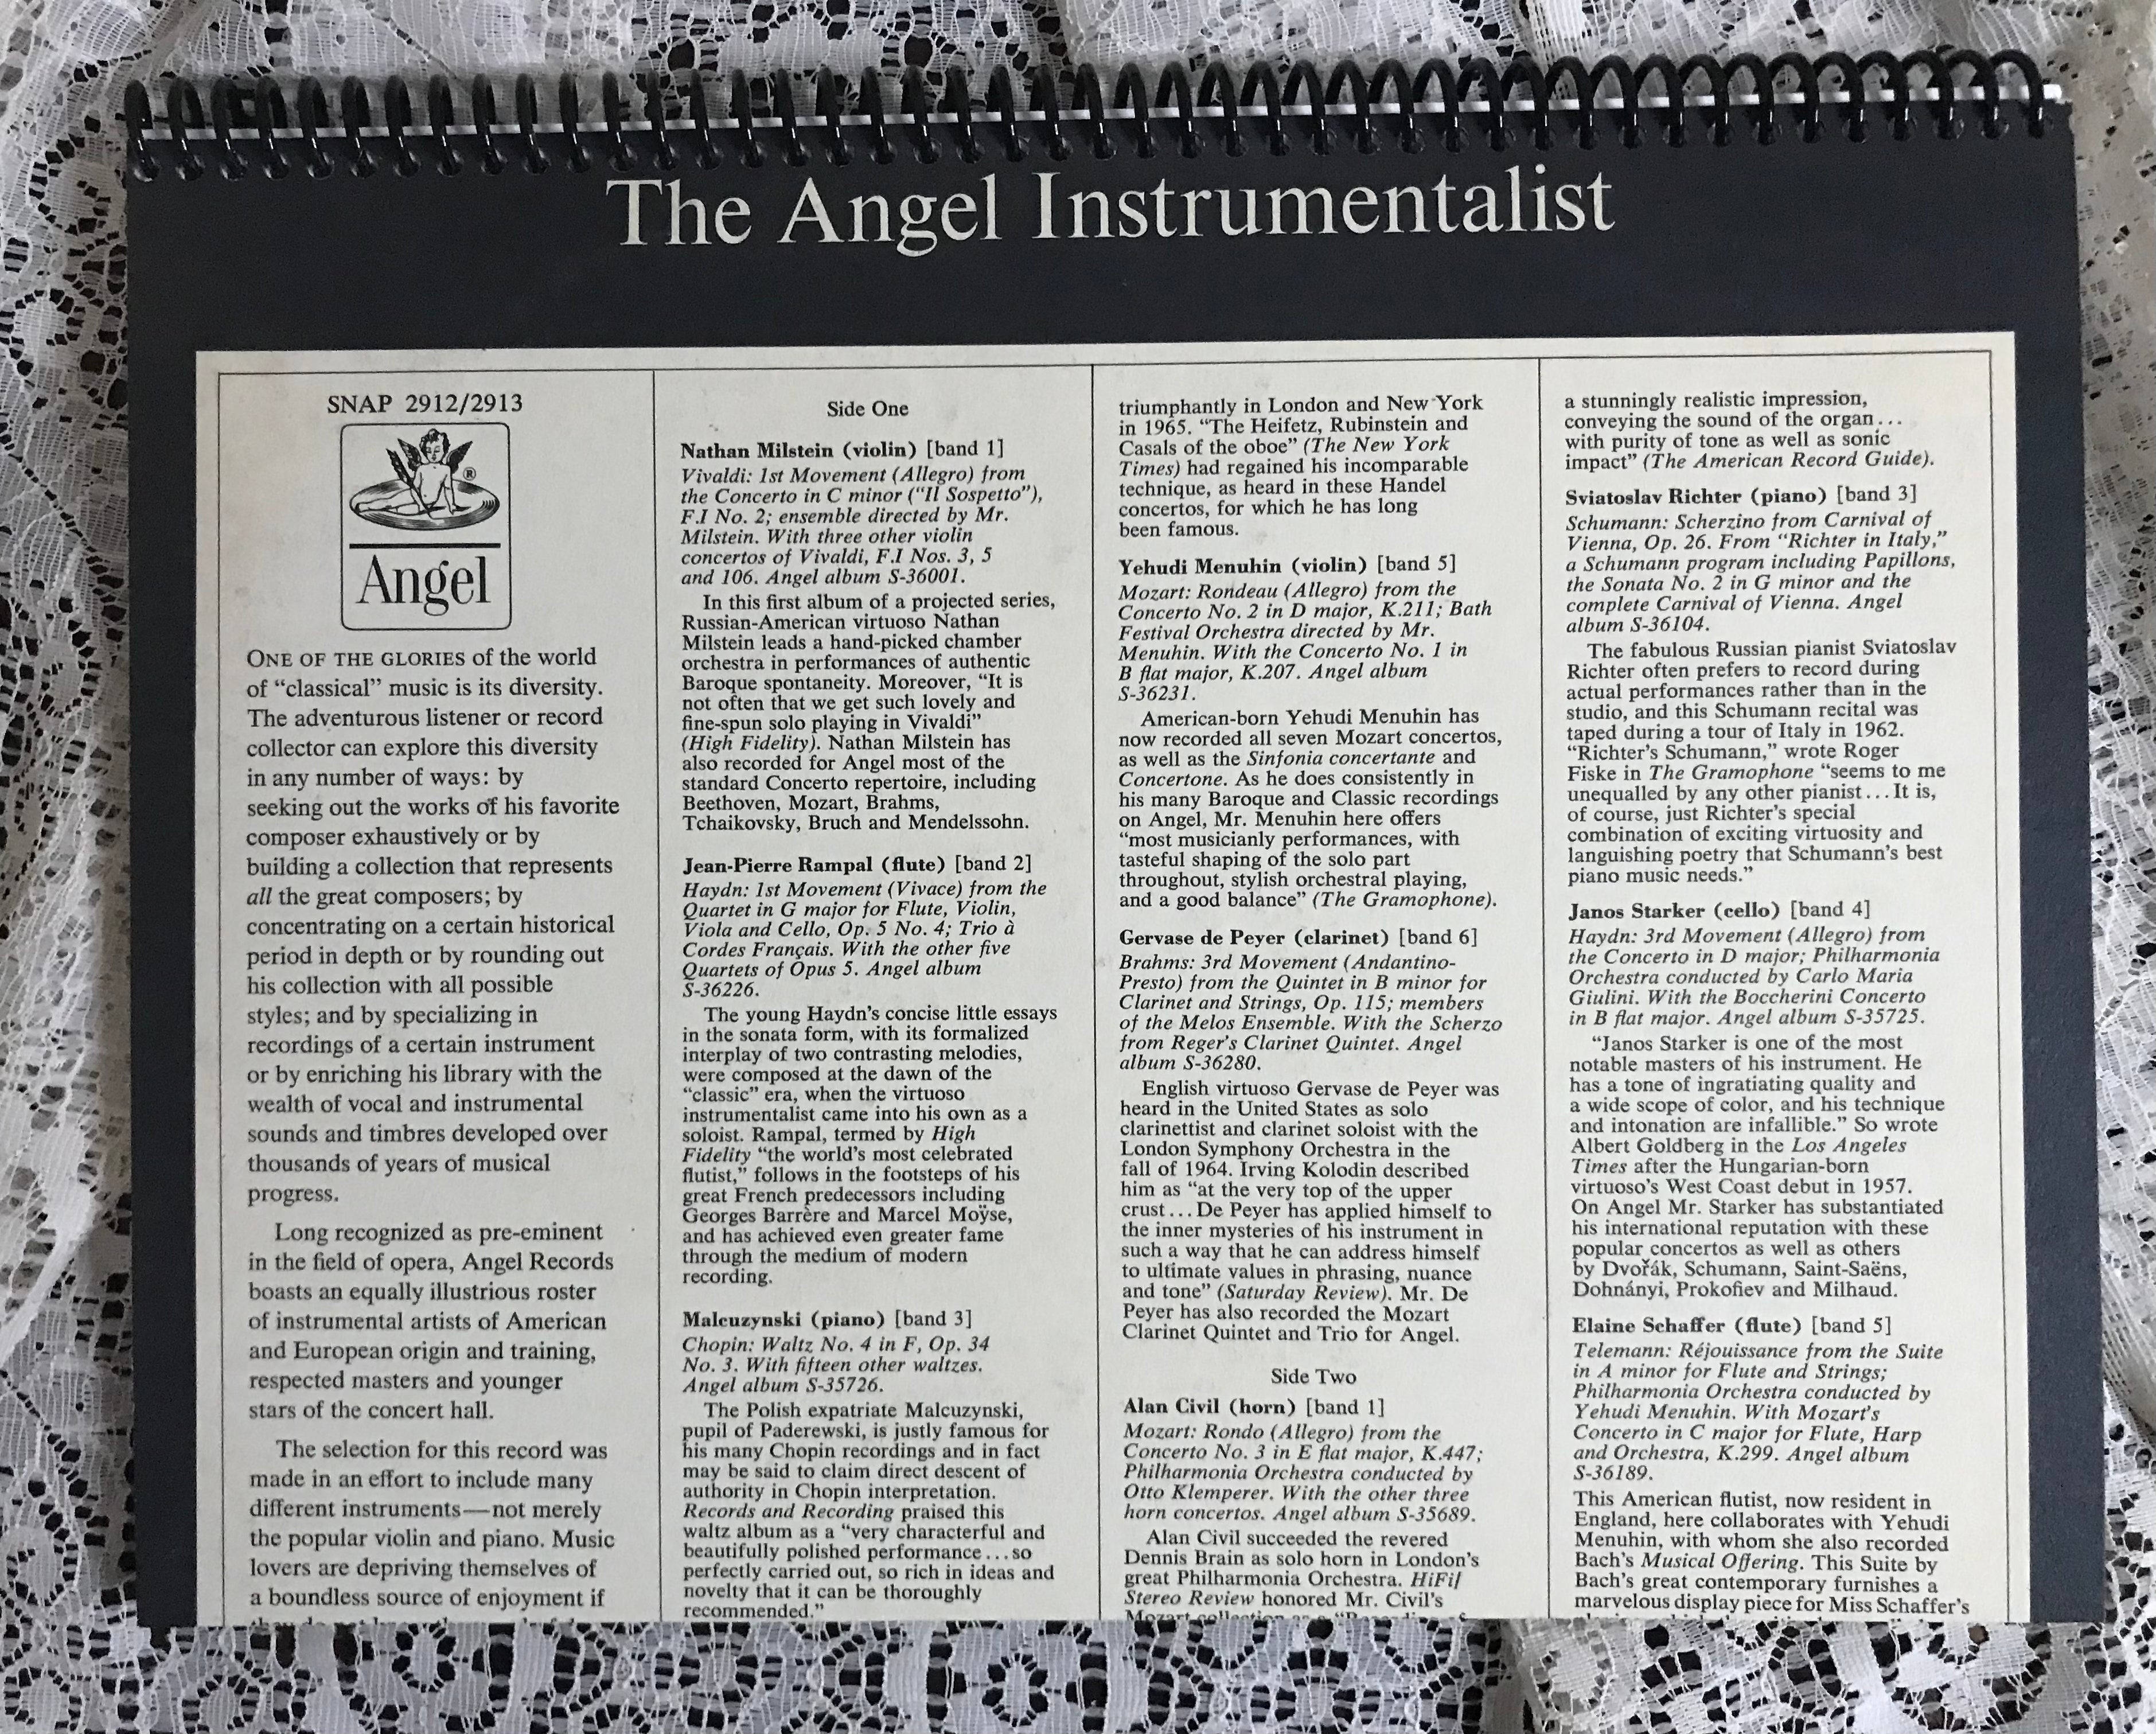 Angel Instrumentalist Album Cover Notebook